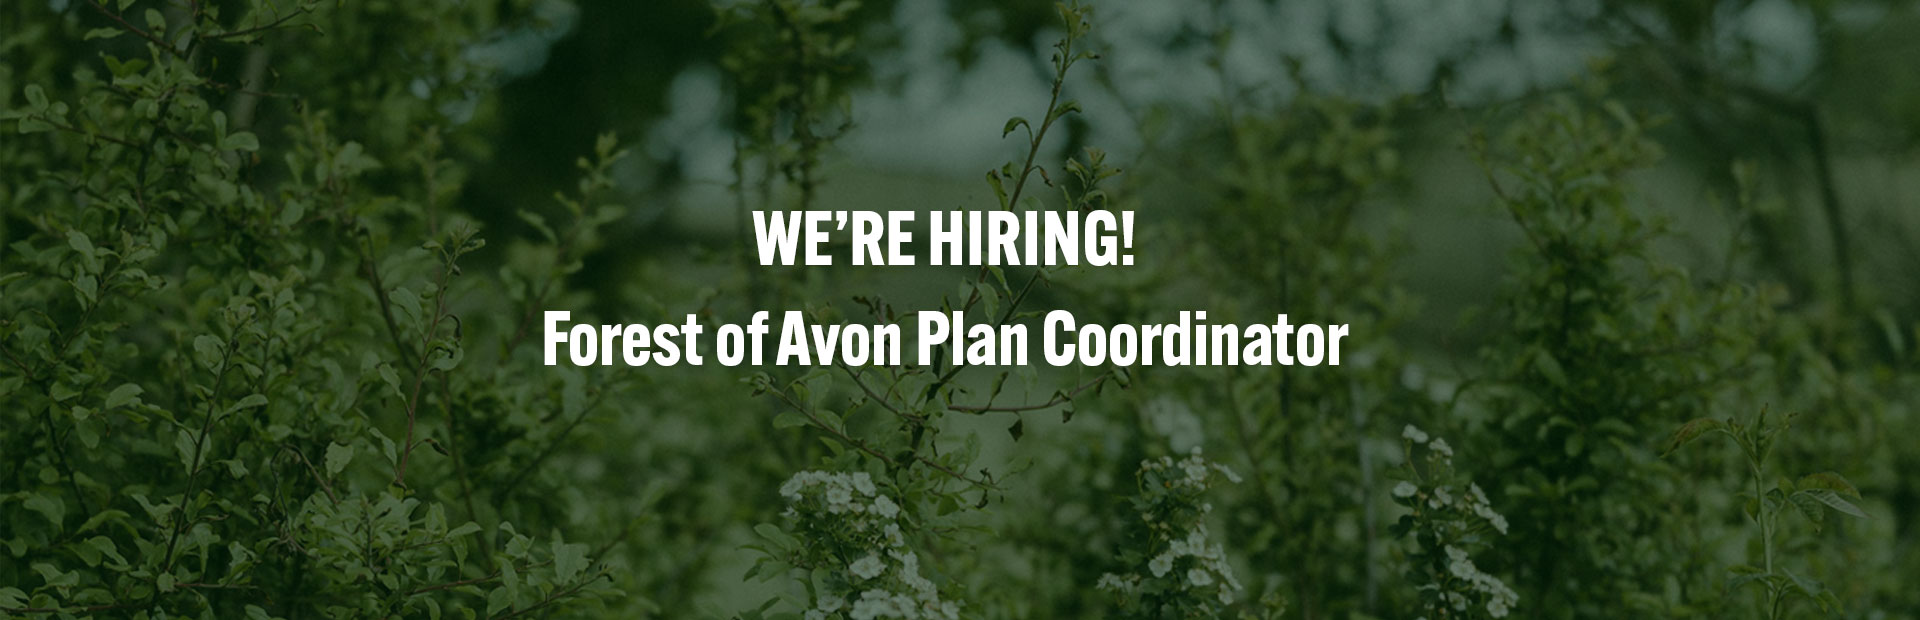 NEW VACANCY: Forest of Avon Plan Coordinator